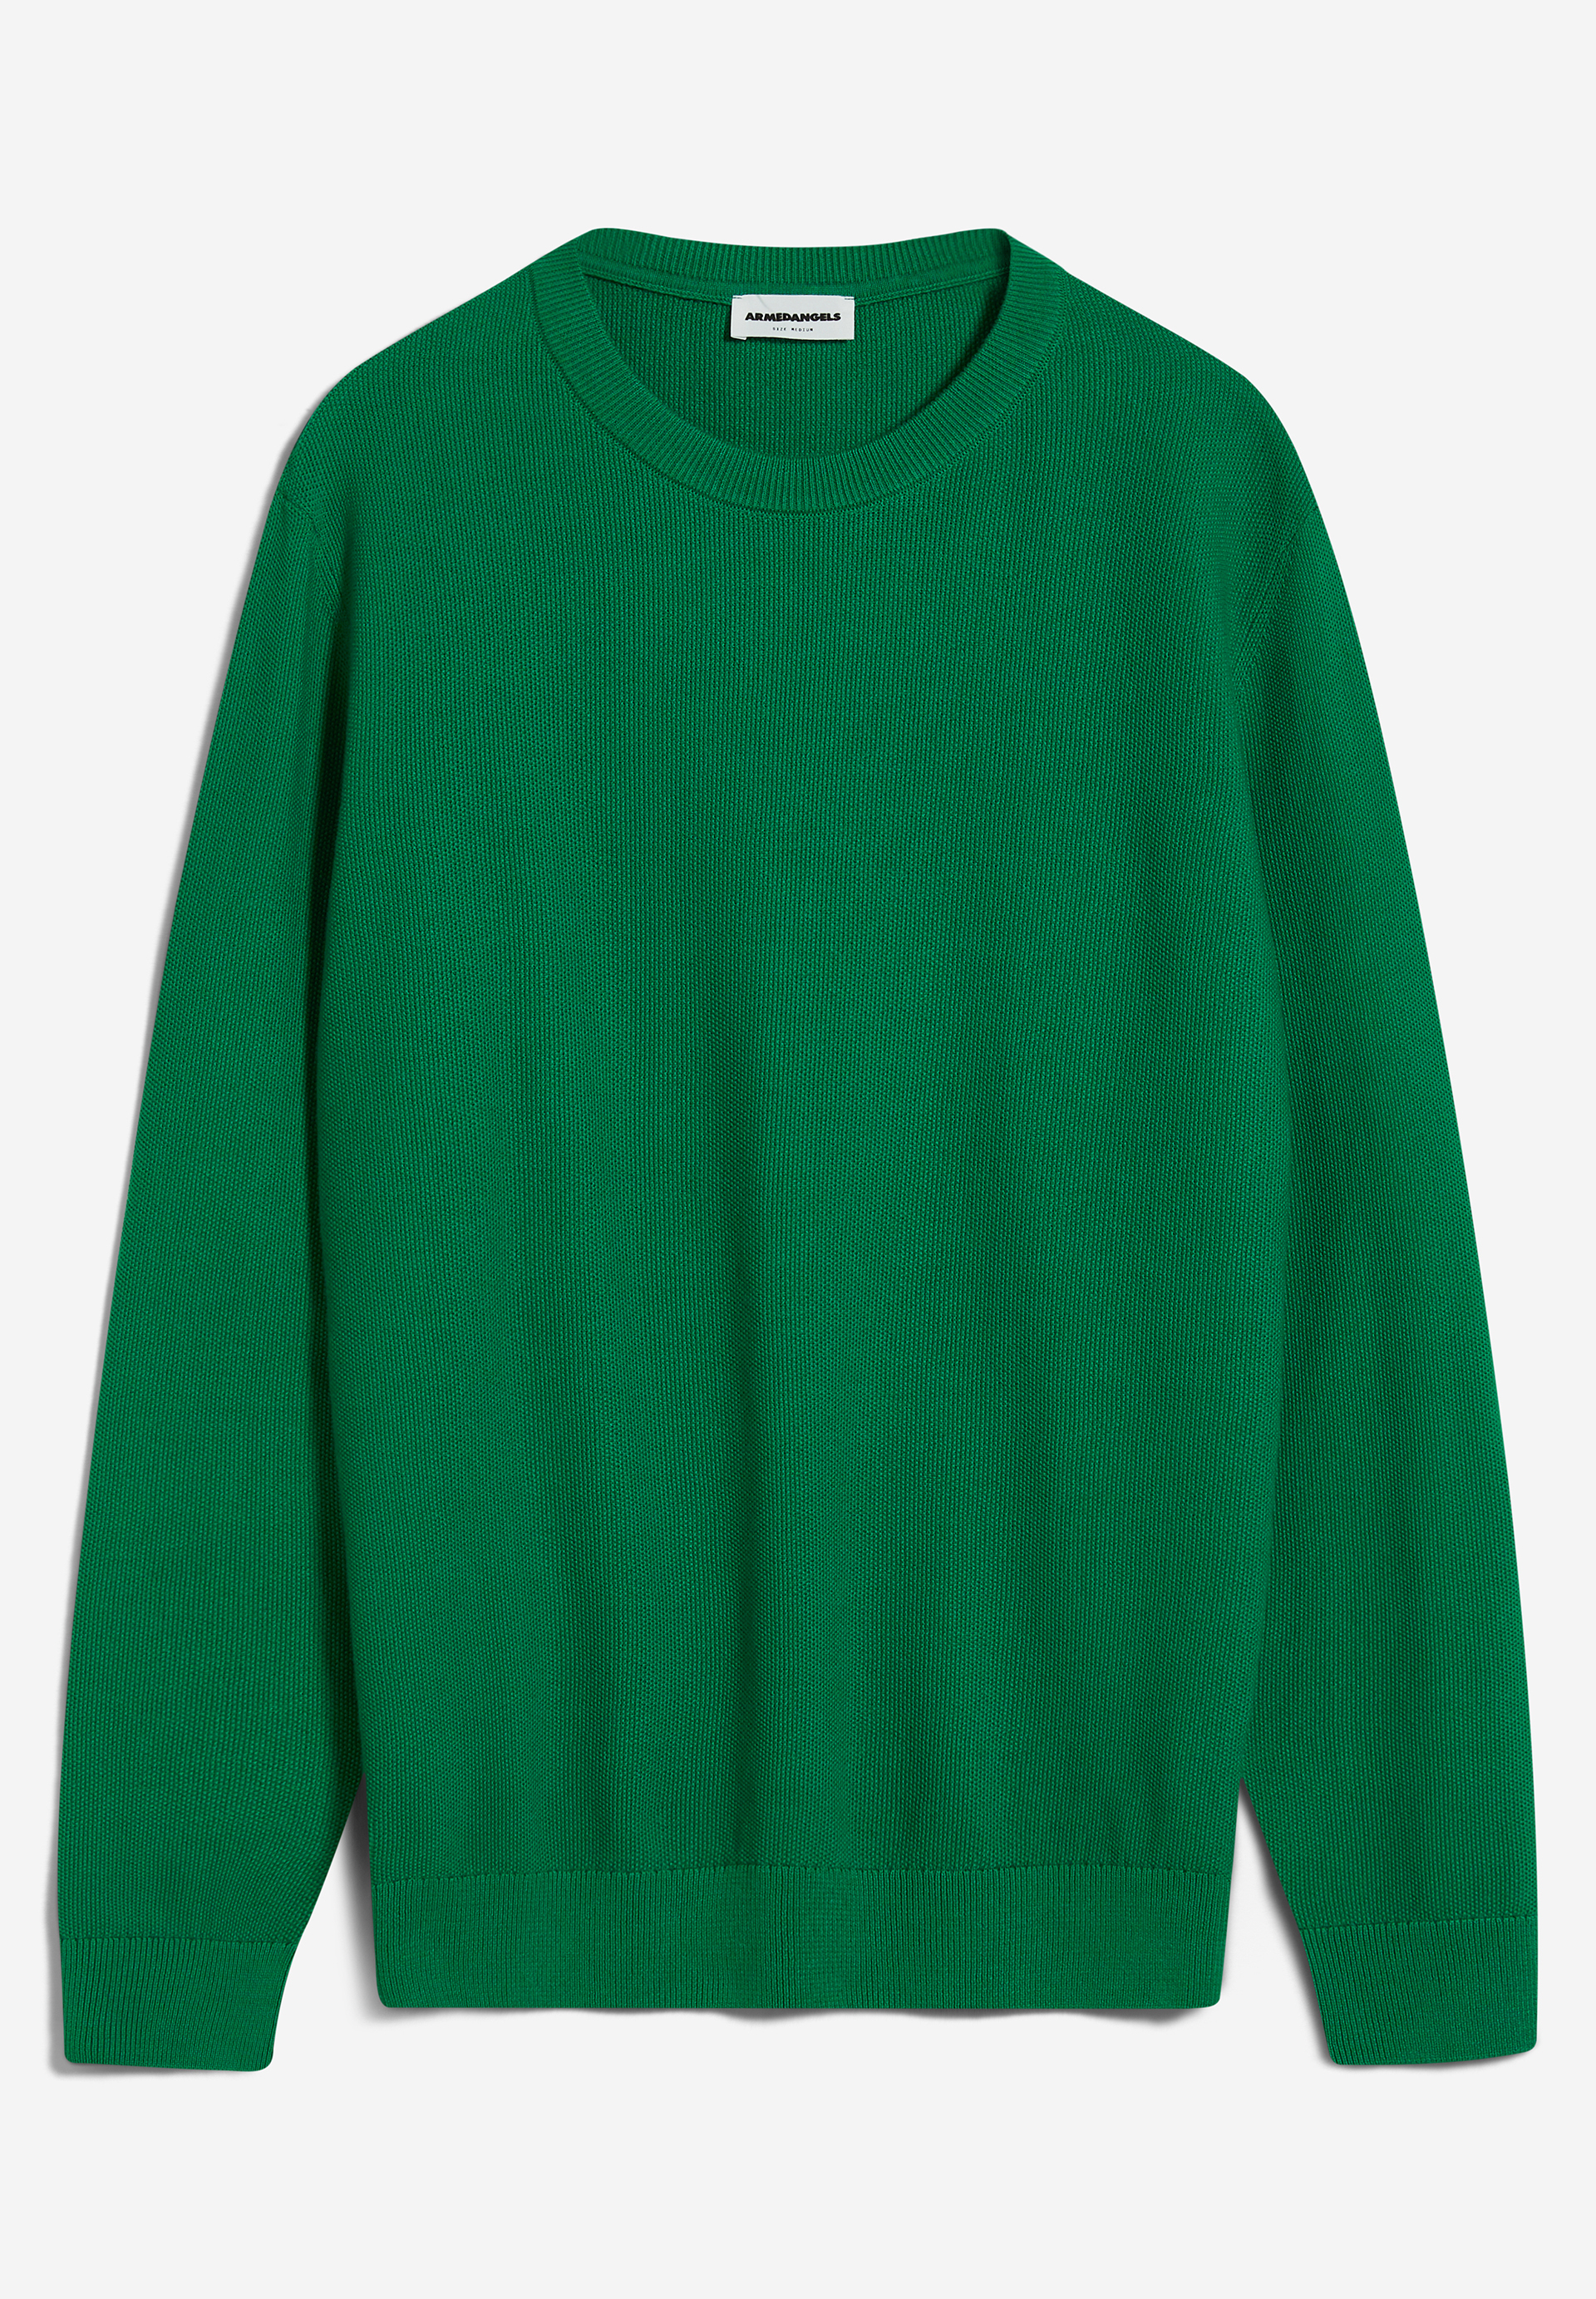 GRAANOS Sweater Regular Fit made of Organic Cotton